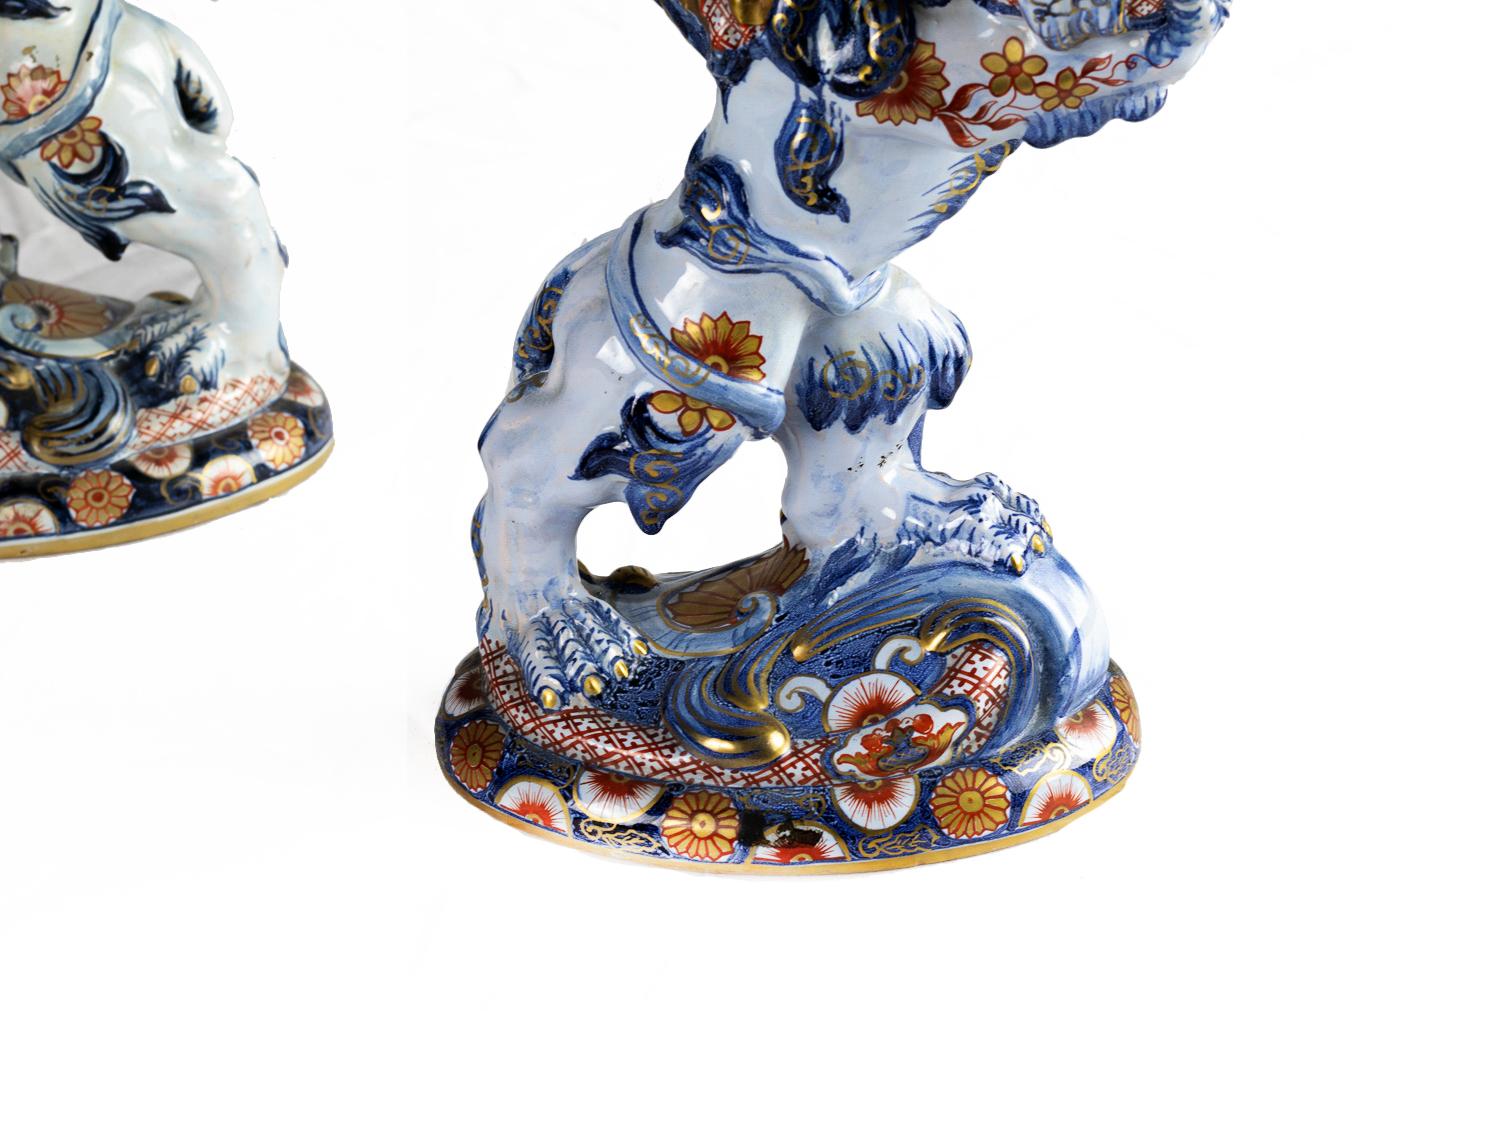  Pair of Antique Porcelain Lions Candle Holders by Emile Gallé For Sale 2